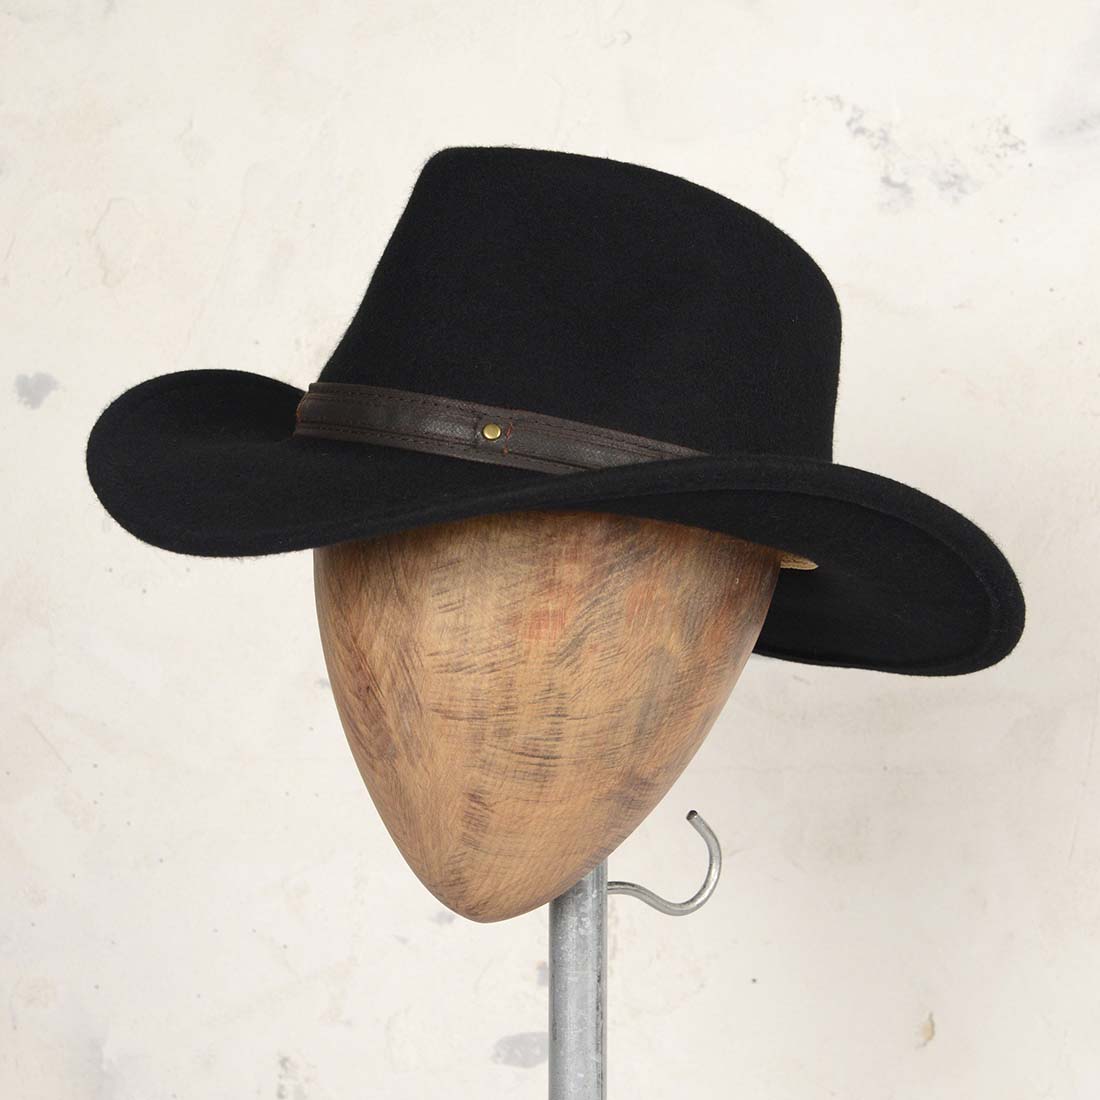 Scalia Black Wool Felt Outback Hat - Cracker Barrel